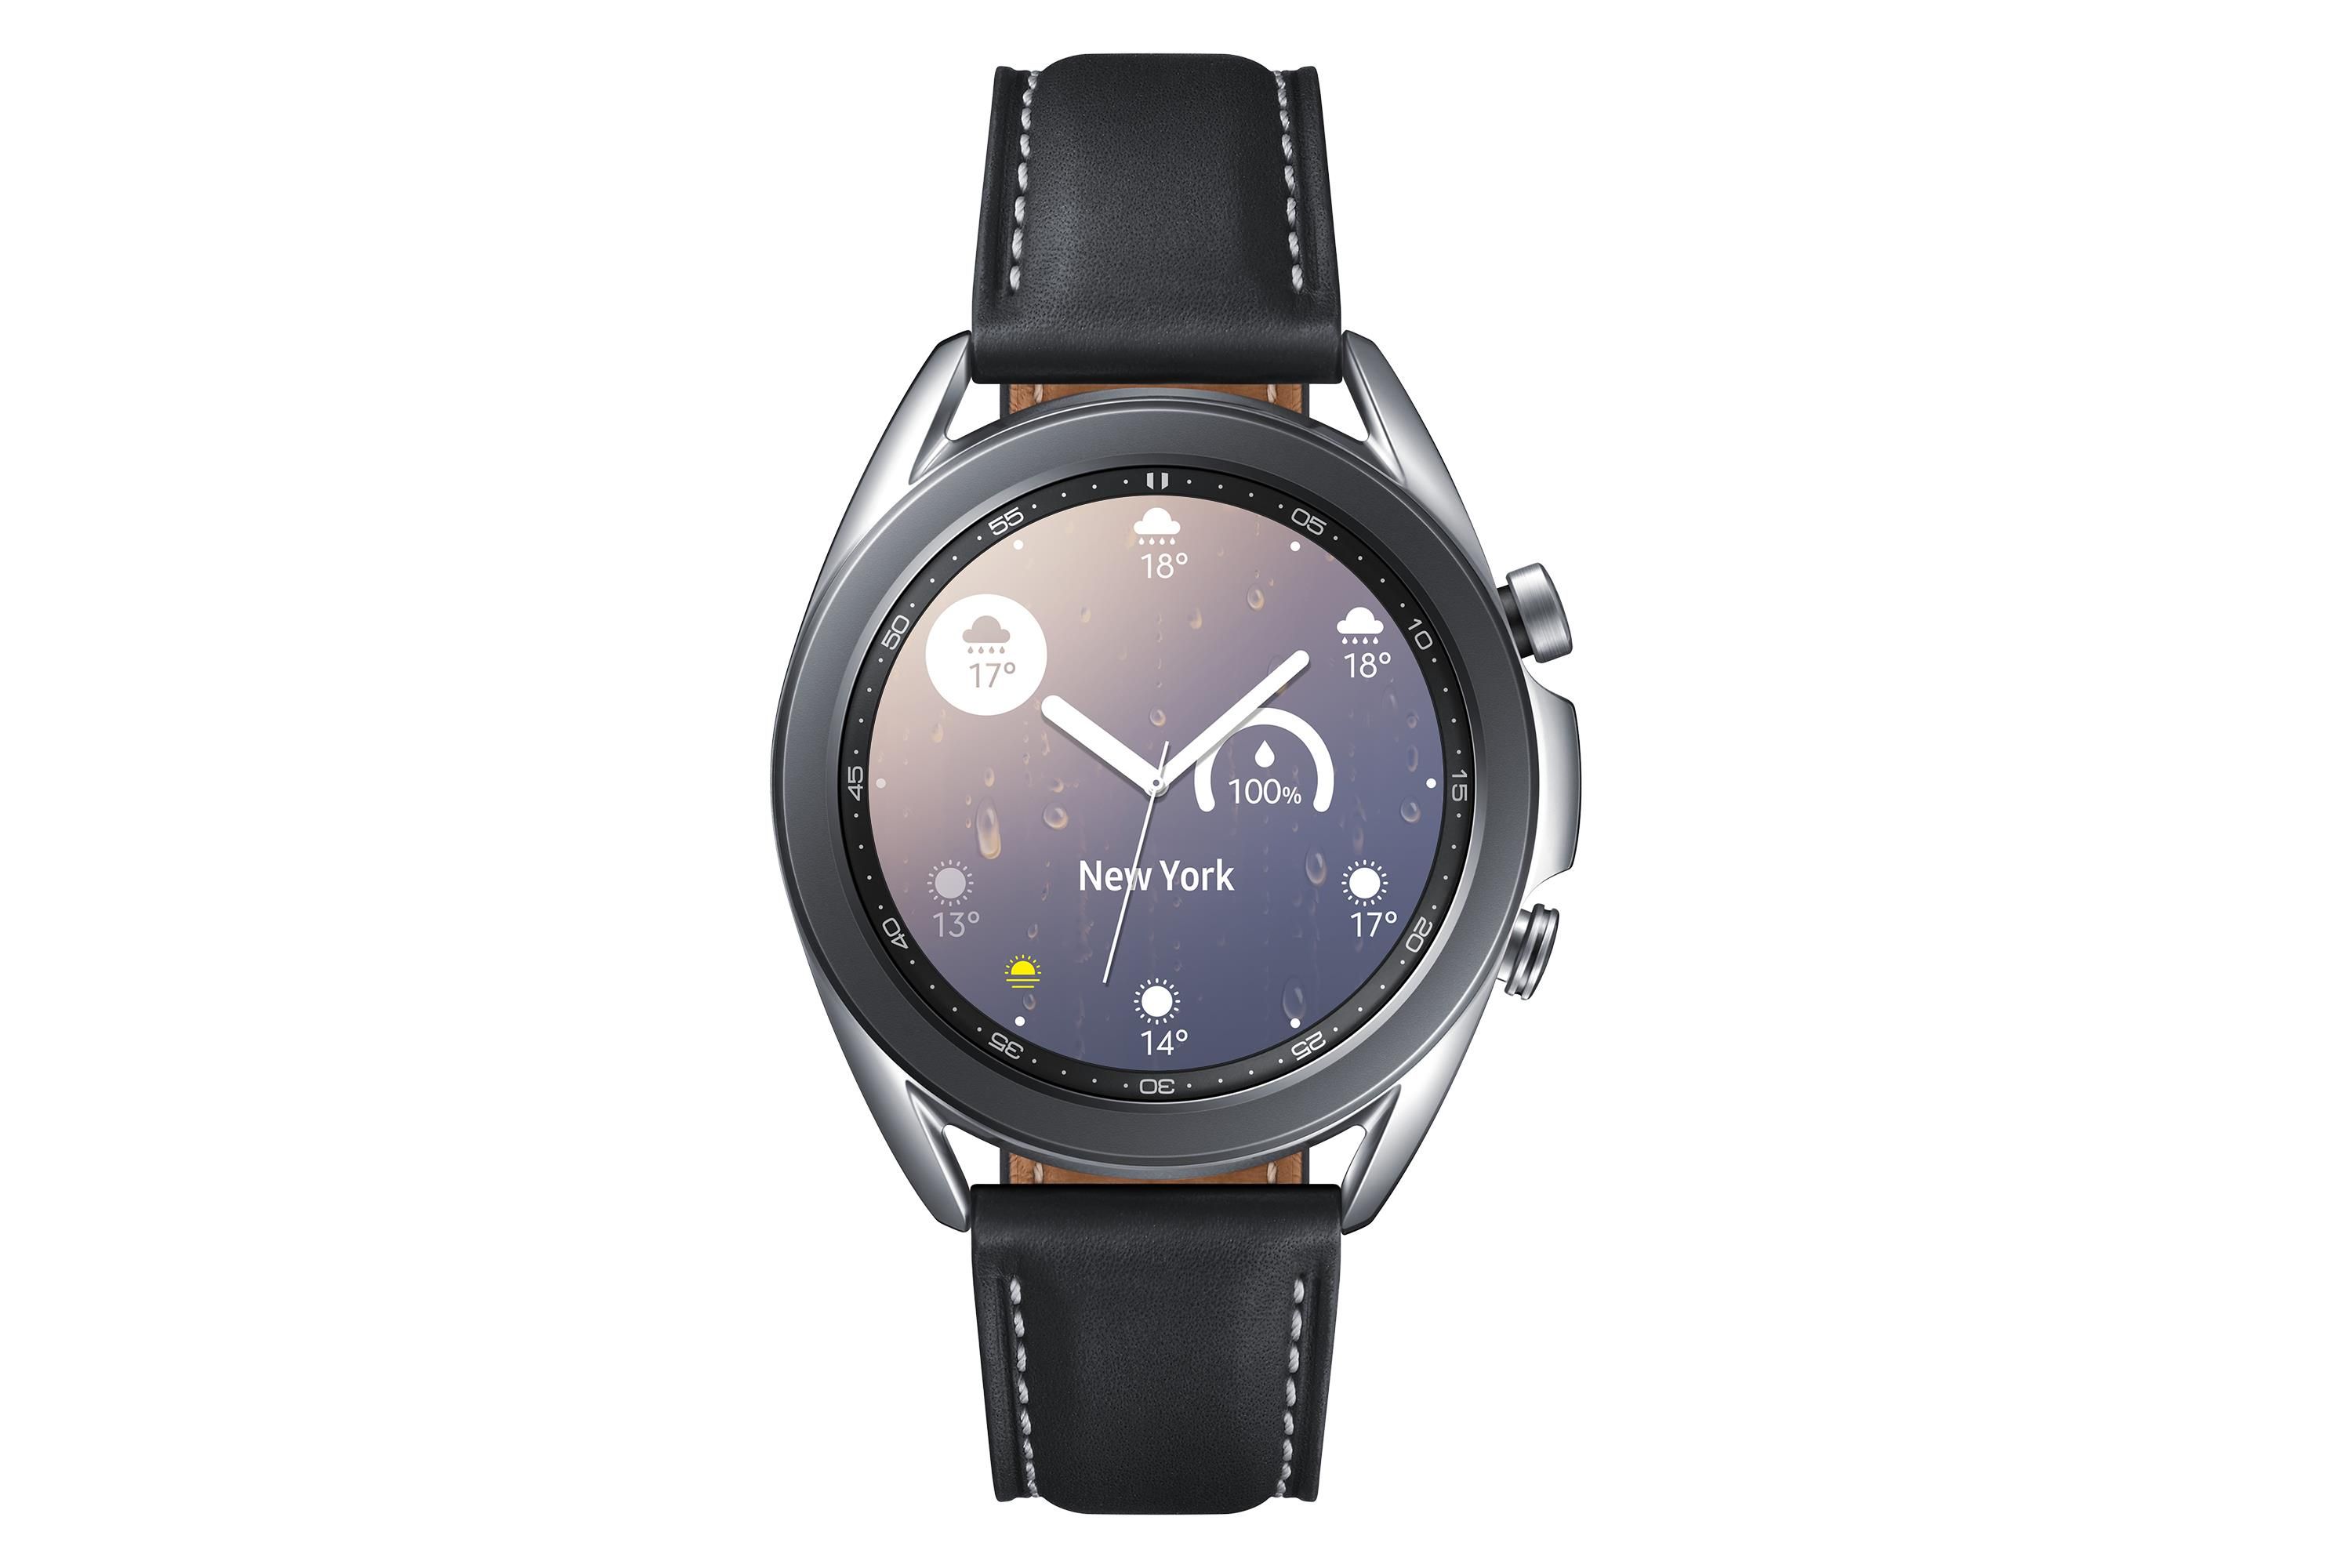 Samsung Galaxy Watch3 Smartwatch